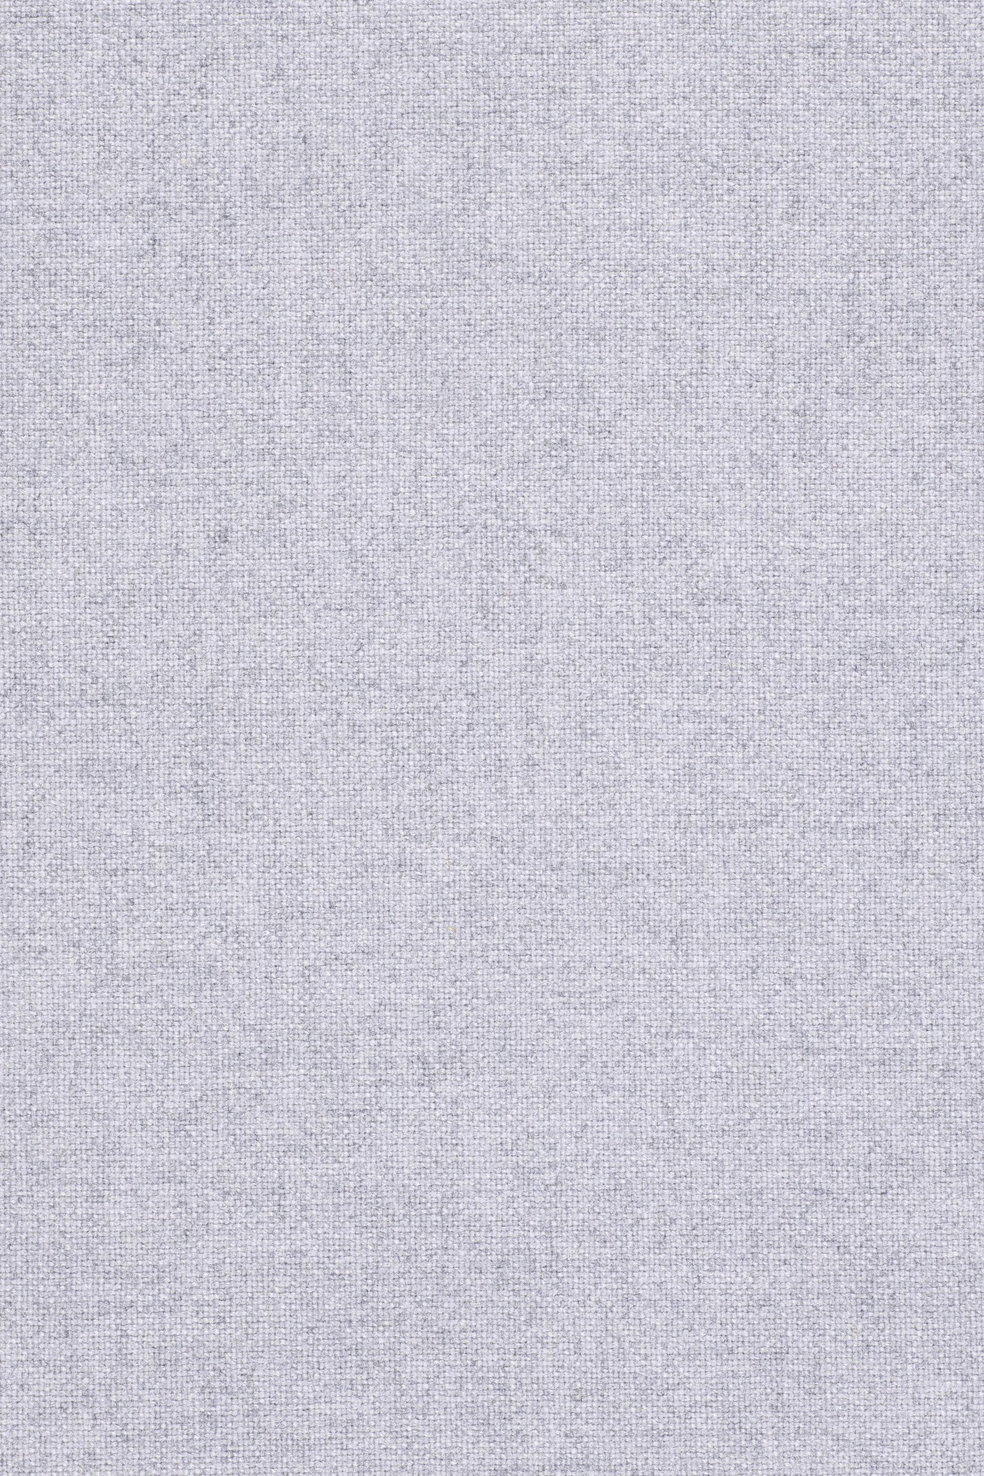 Fabric sample Tonica 2 623 purple